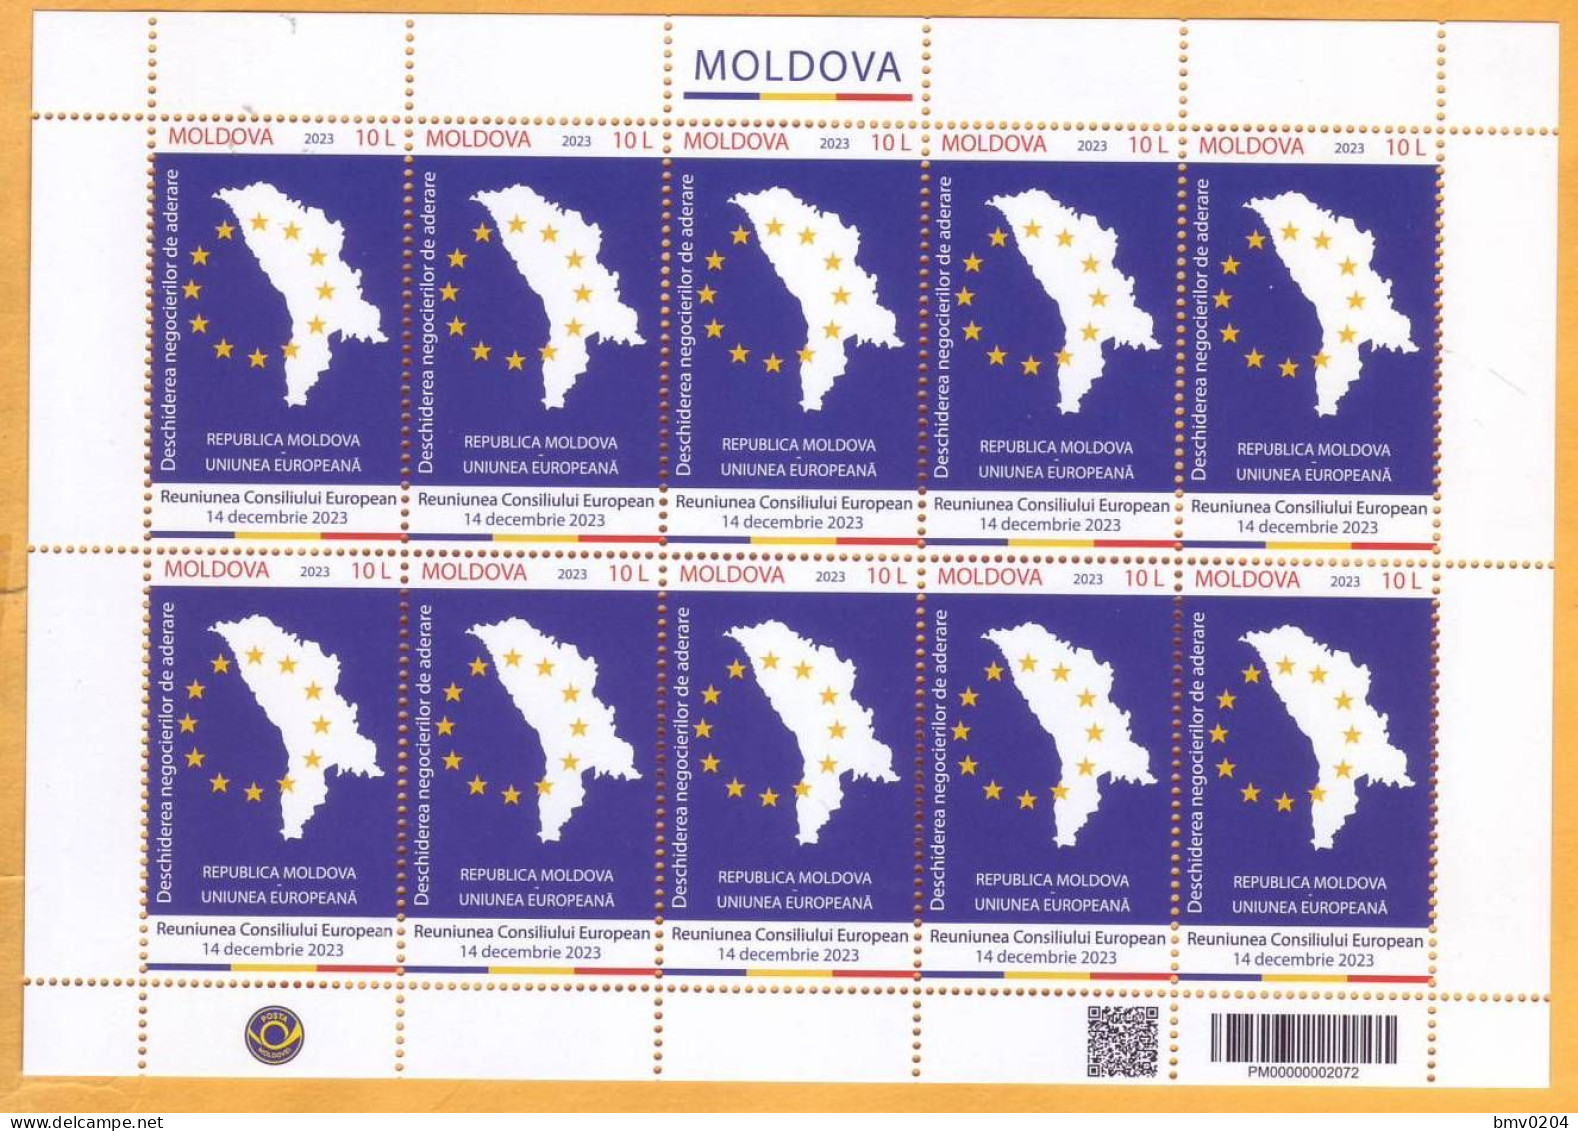 2023  Moldova  Sheet The Opening Of Accession Negotiations REPUBLIC OF MOLDOVA - EUROPEAN UNION  Mint - Idee Europee